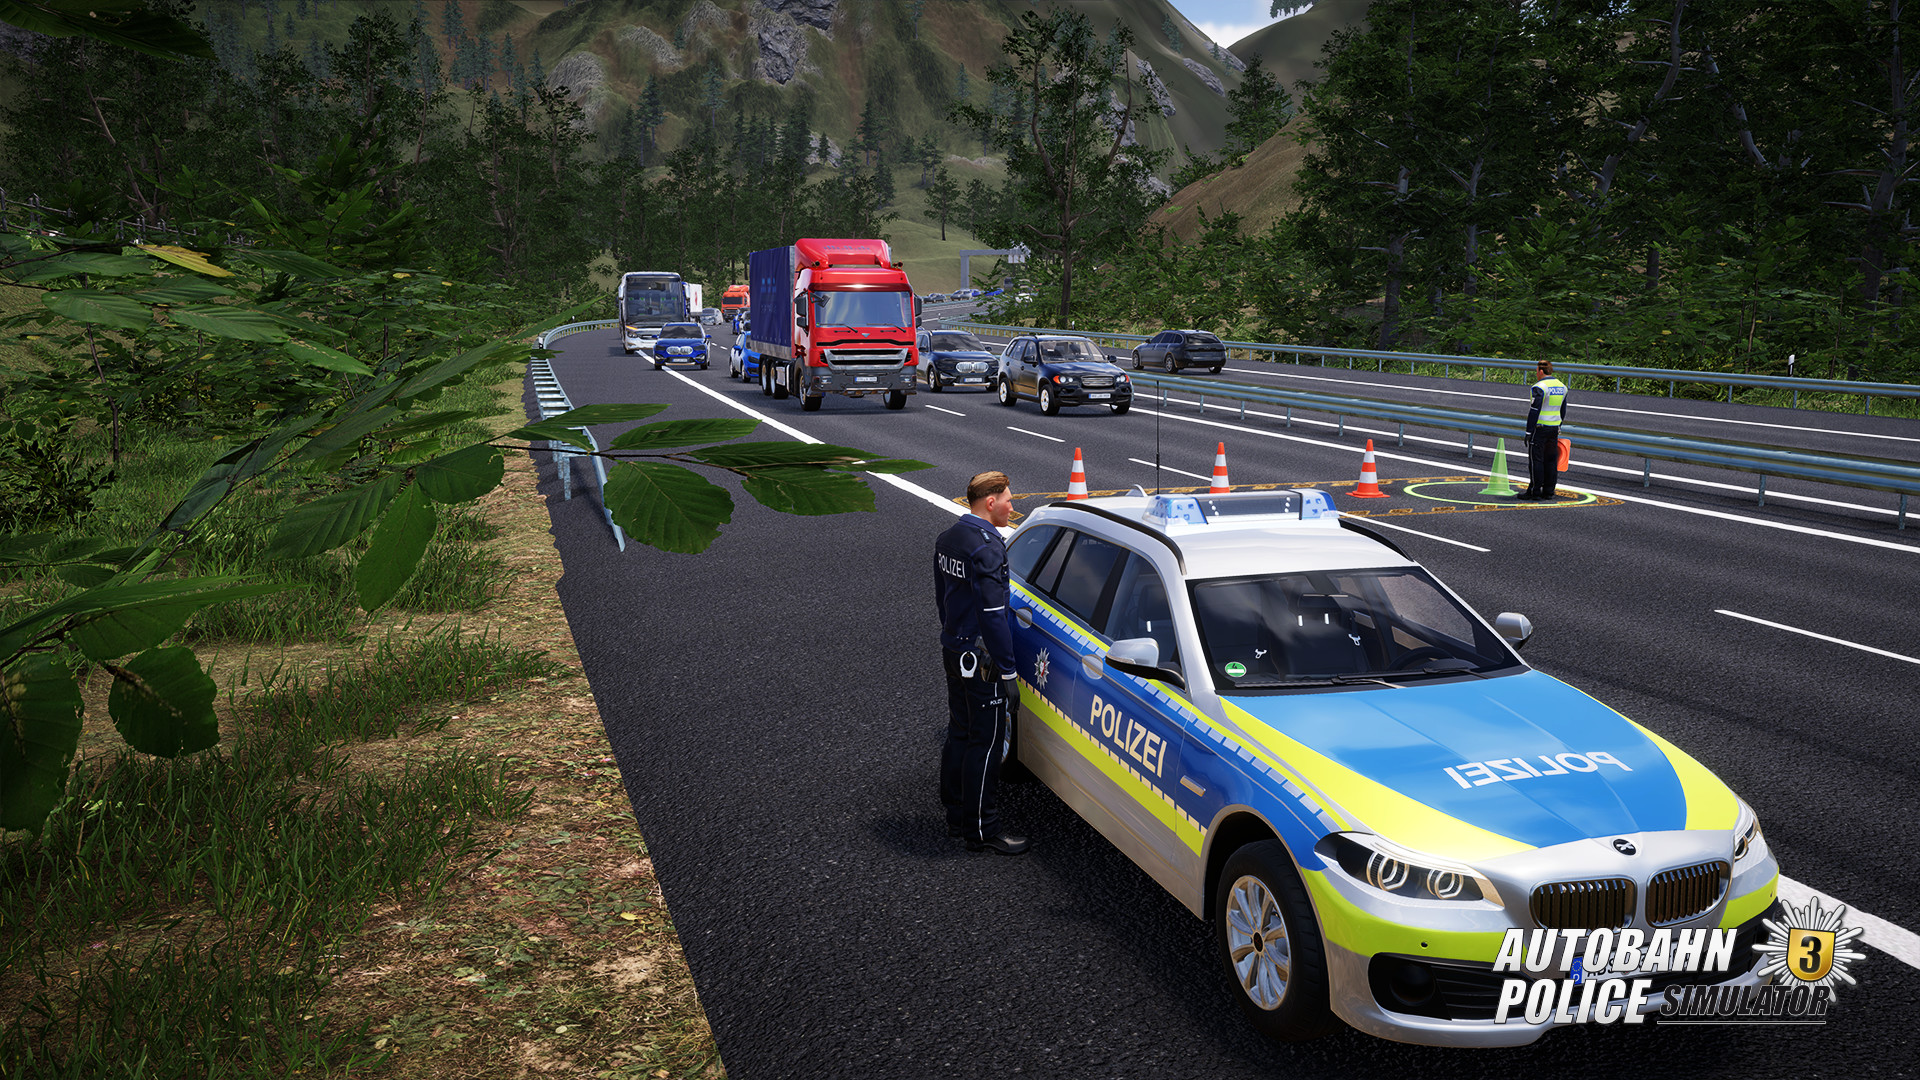 Autobahn Police Simulator 3 EN/DE Languages Only Steam CD Key